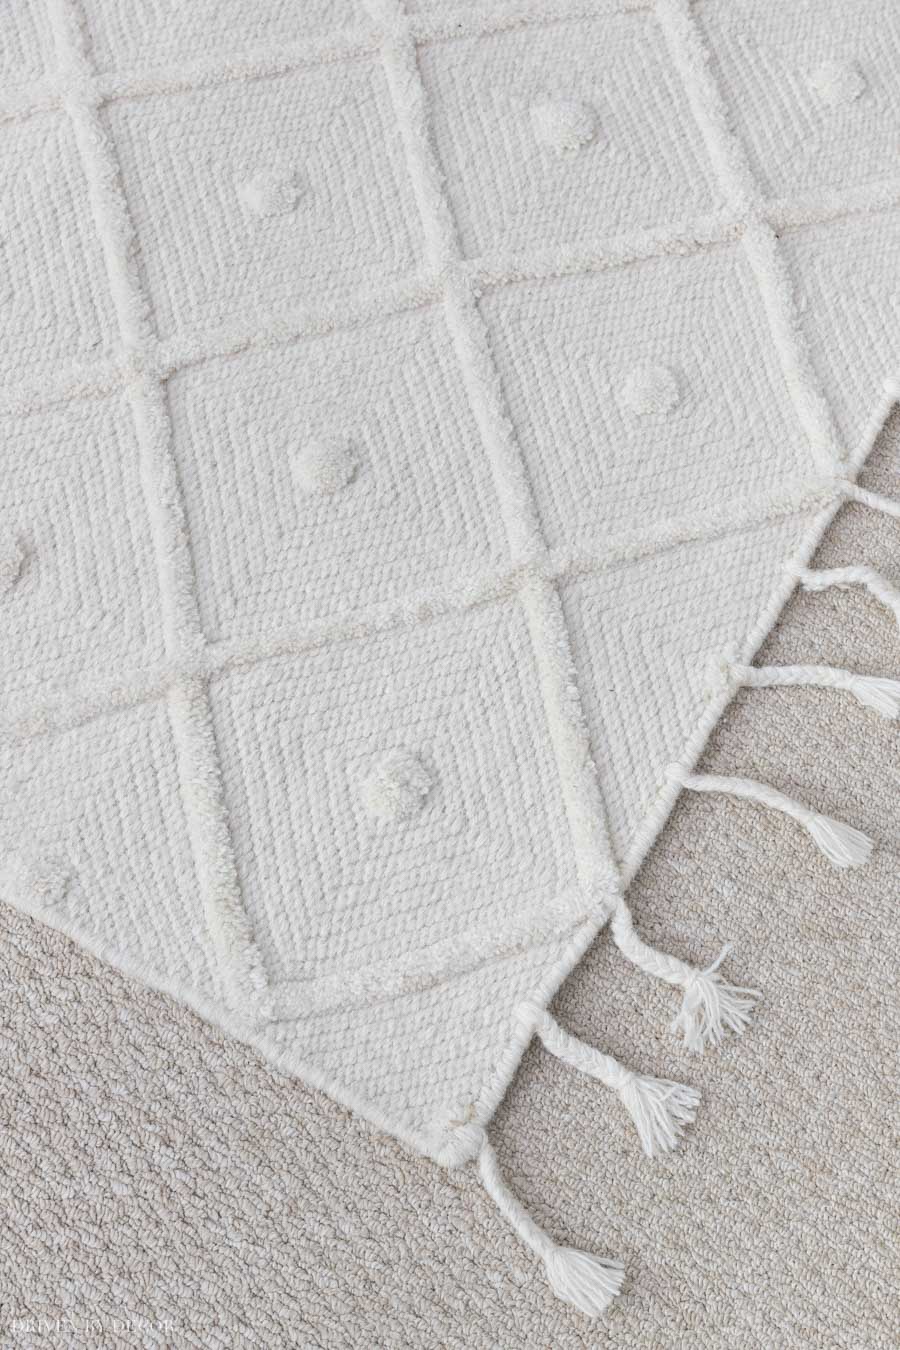 LOVE this neutral cream diamond area rug - so much great texture!